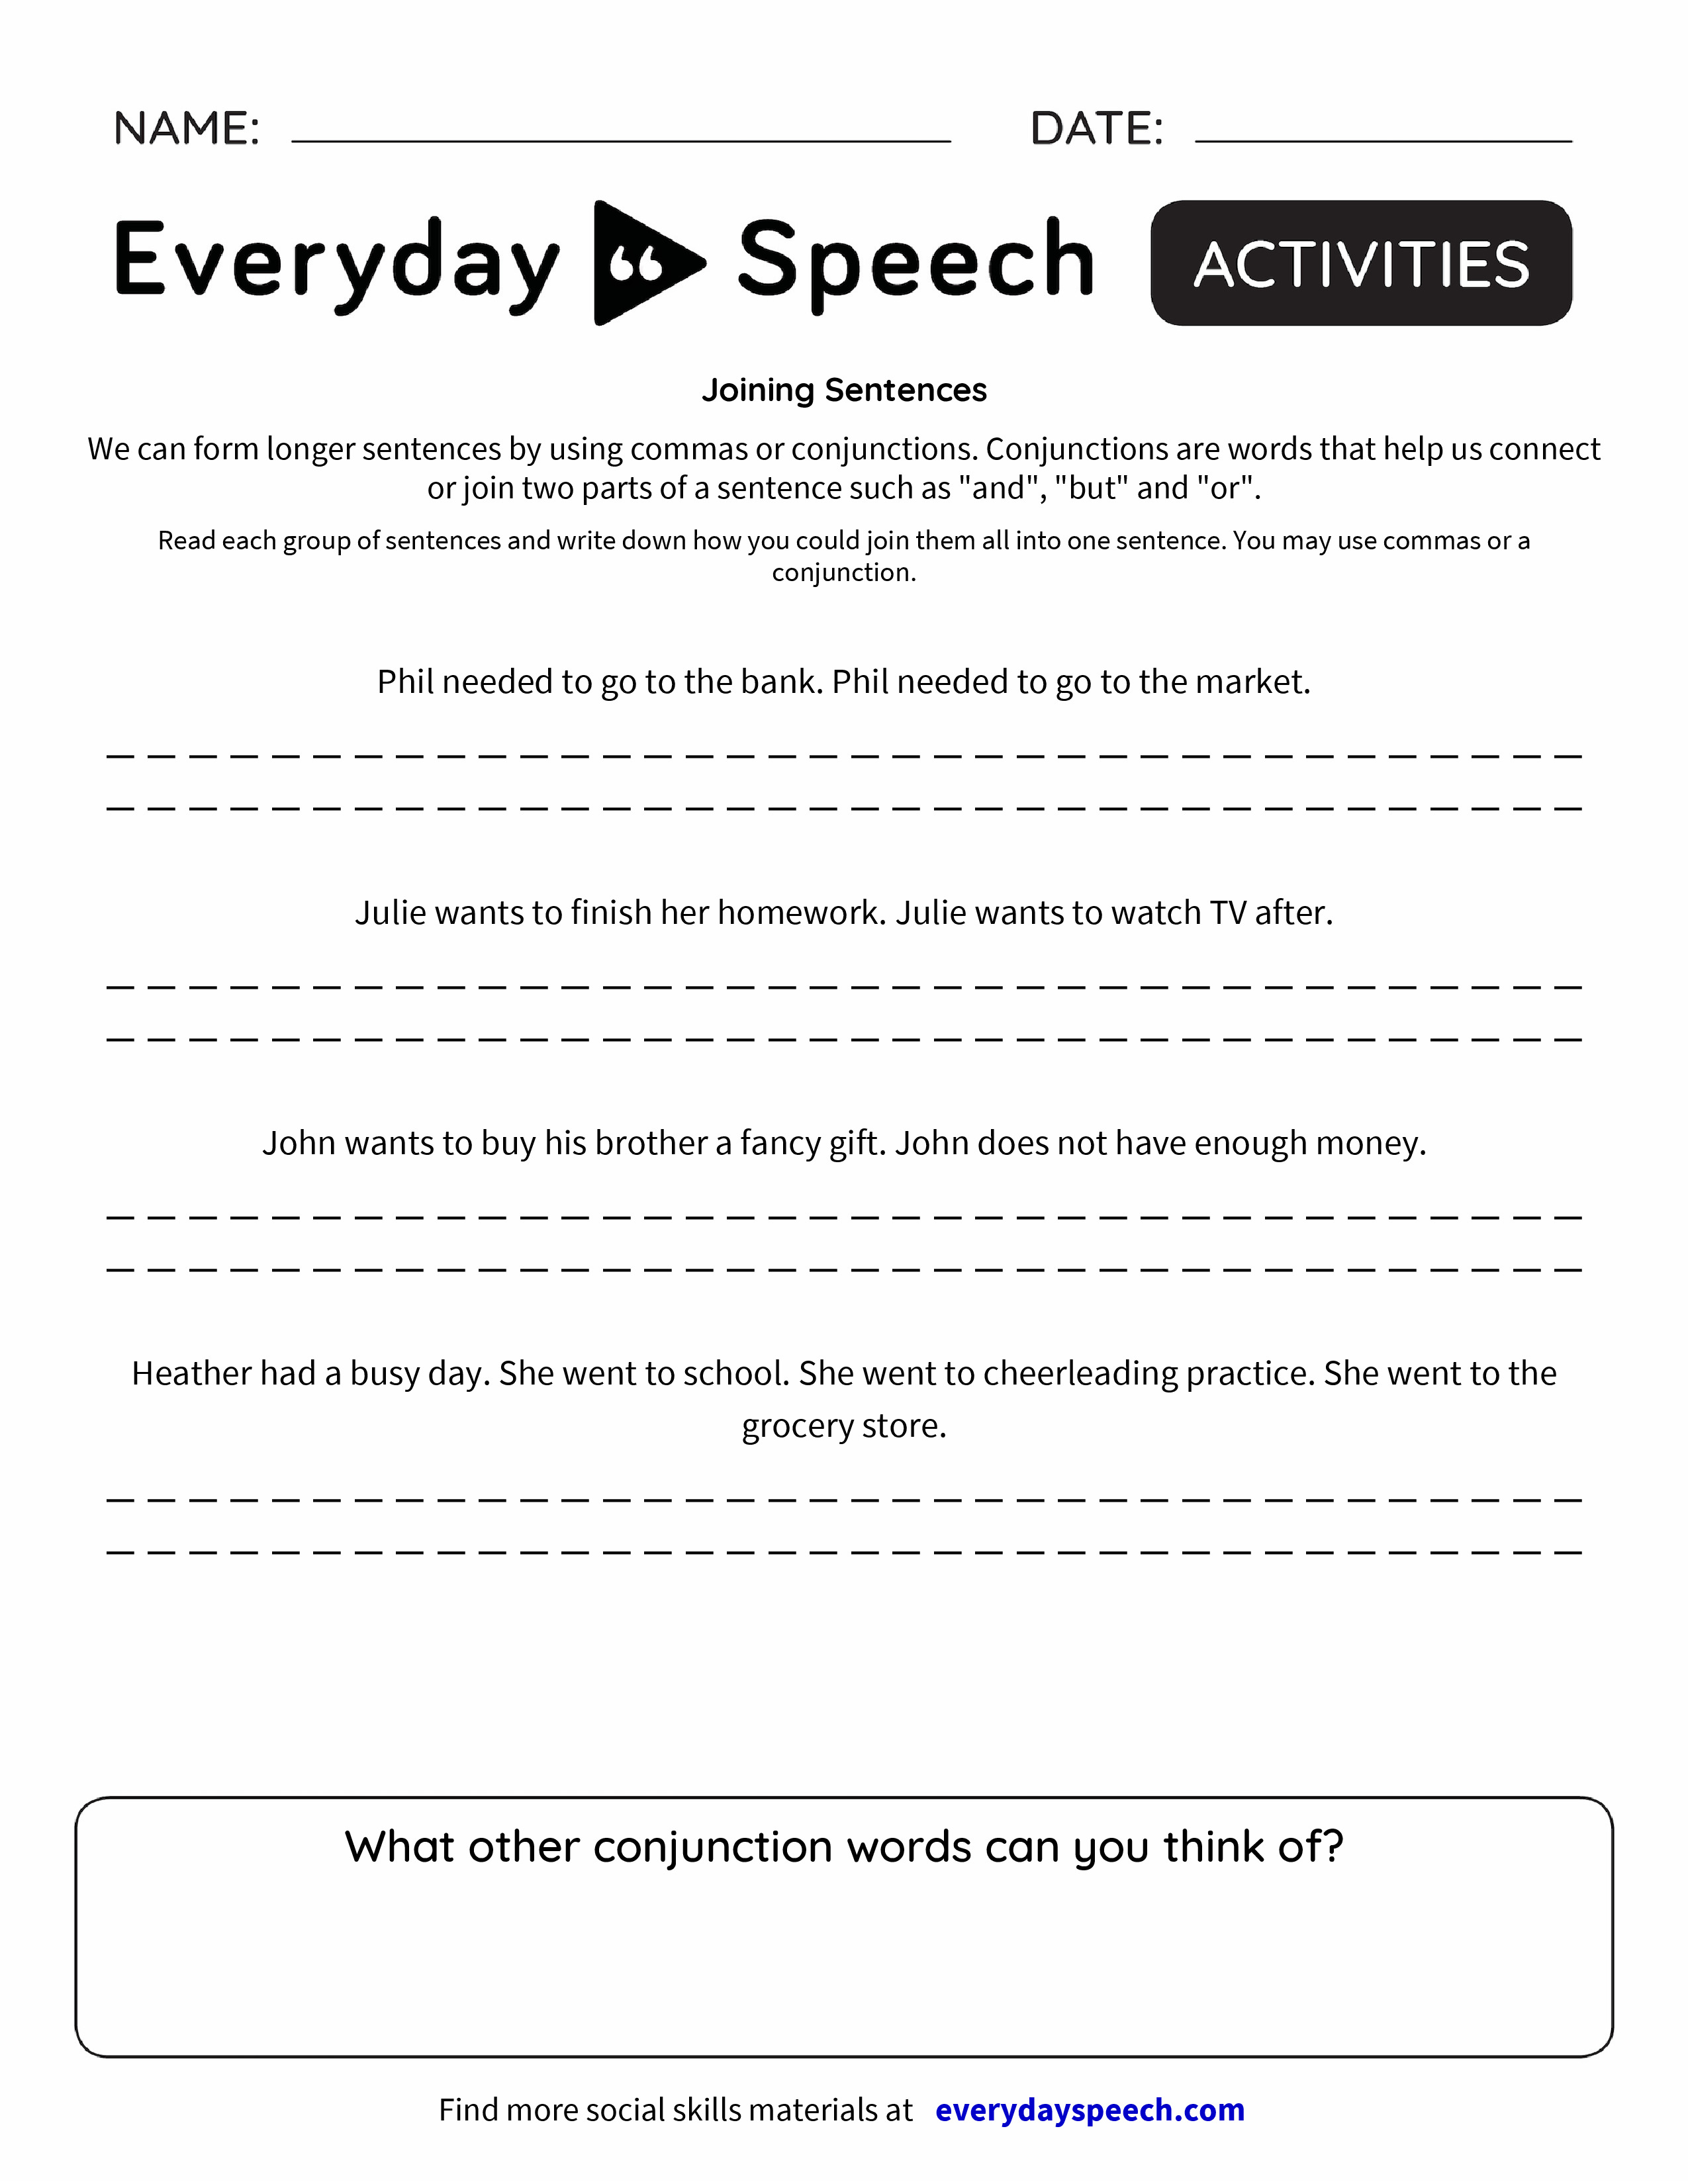 joining-sentences-everyday-speech-everyday-speech